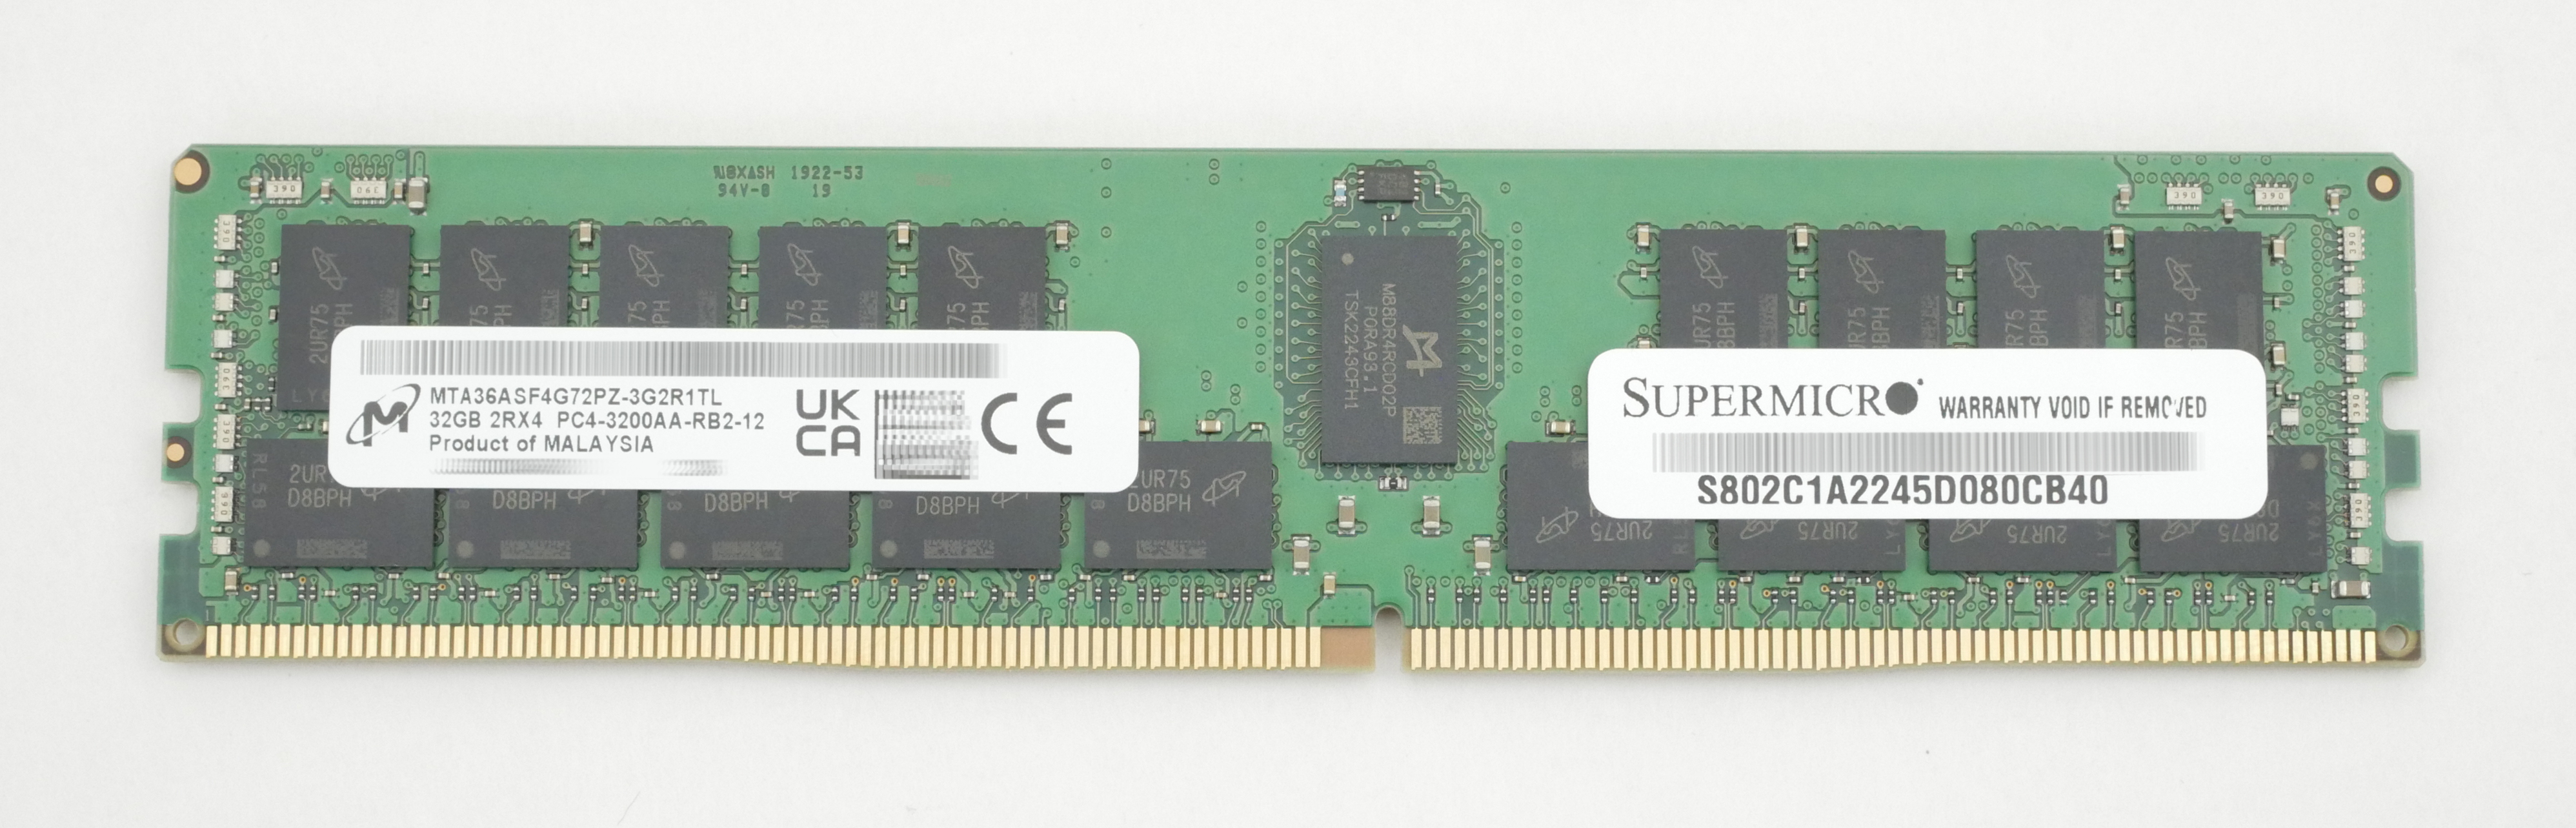 Supermicro 32GB PC4-3200AA-RB2-12 Server Memory MTA36ASF4G72PZ-3G2R1 - Click Image to Close